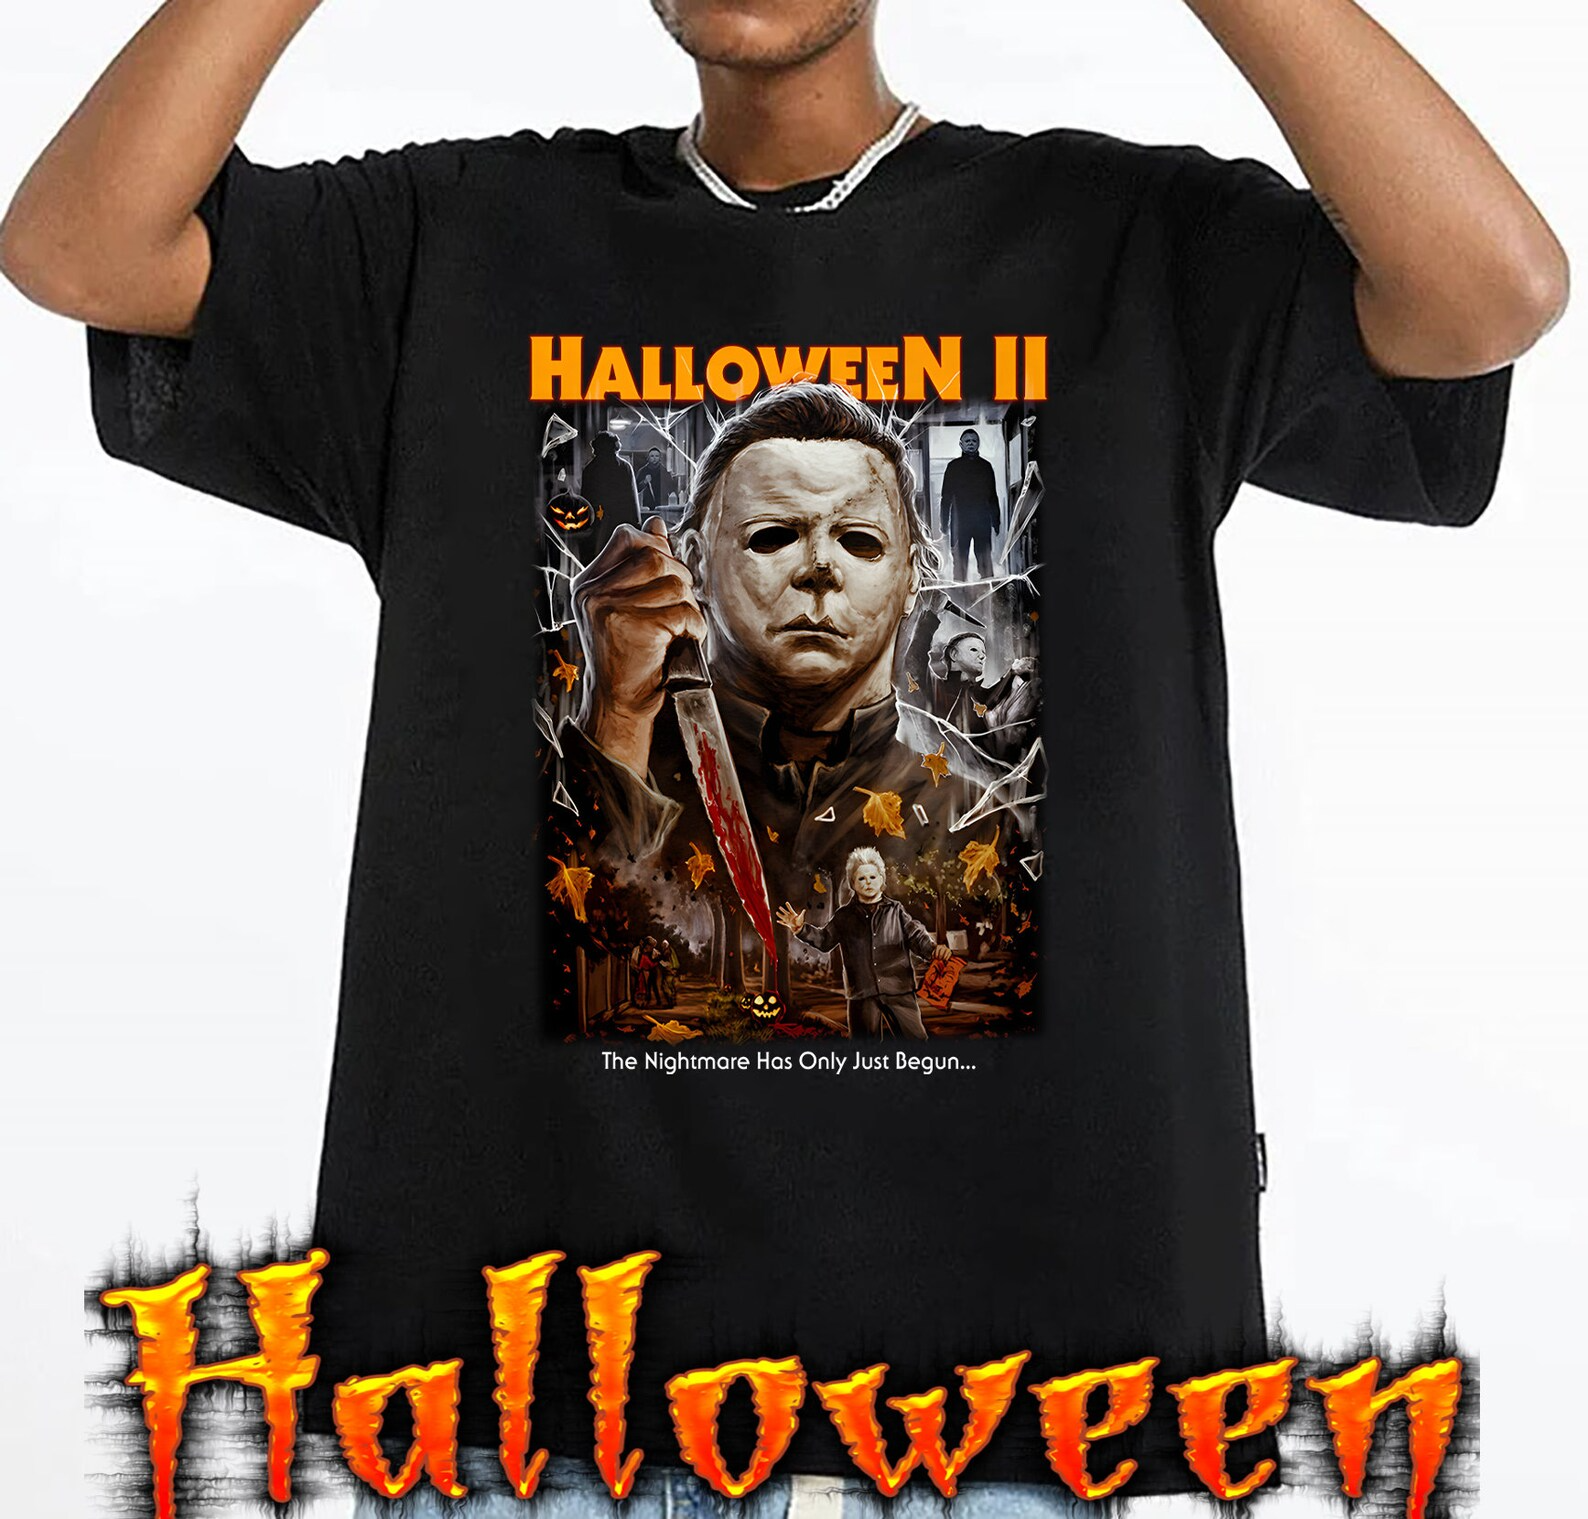 Vintage Horror Movie Shirt, Horror Movie Shirt, Halloween II Shirt - Michael Myers Shirt, Scary Halloween Shirt, Vintage Michael Myers Shirt